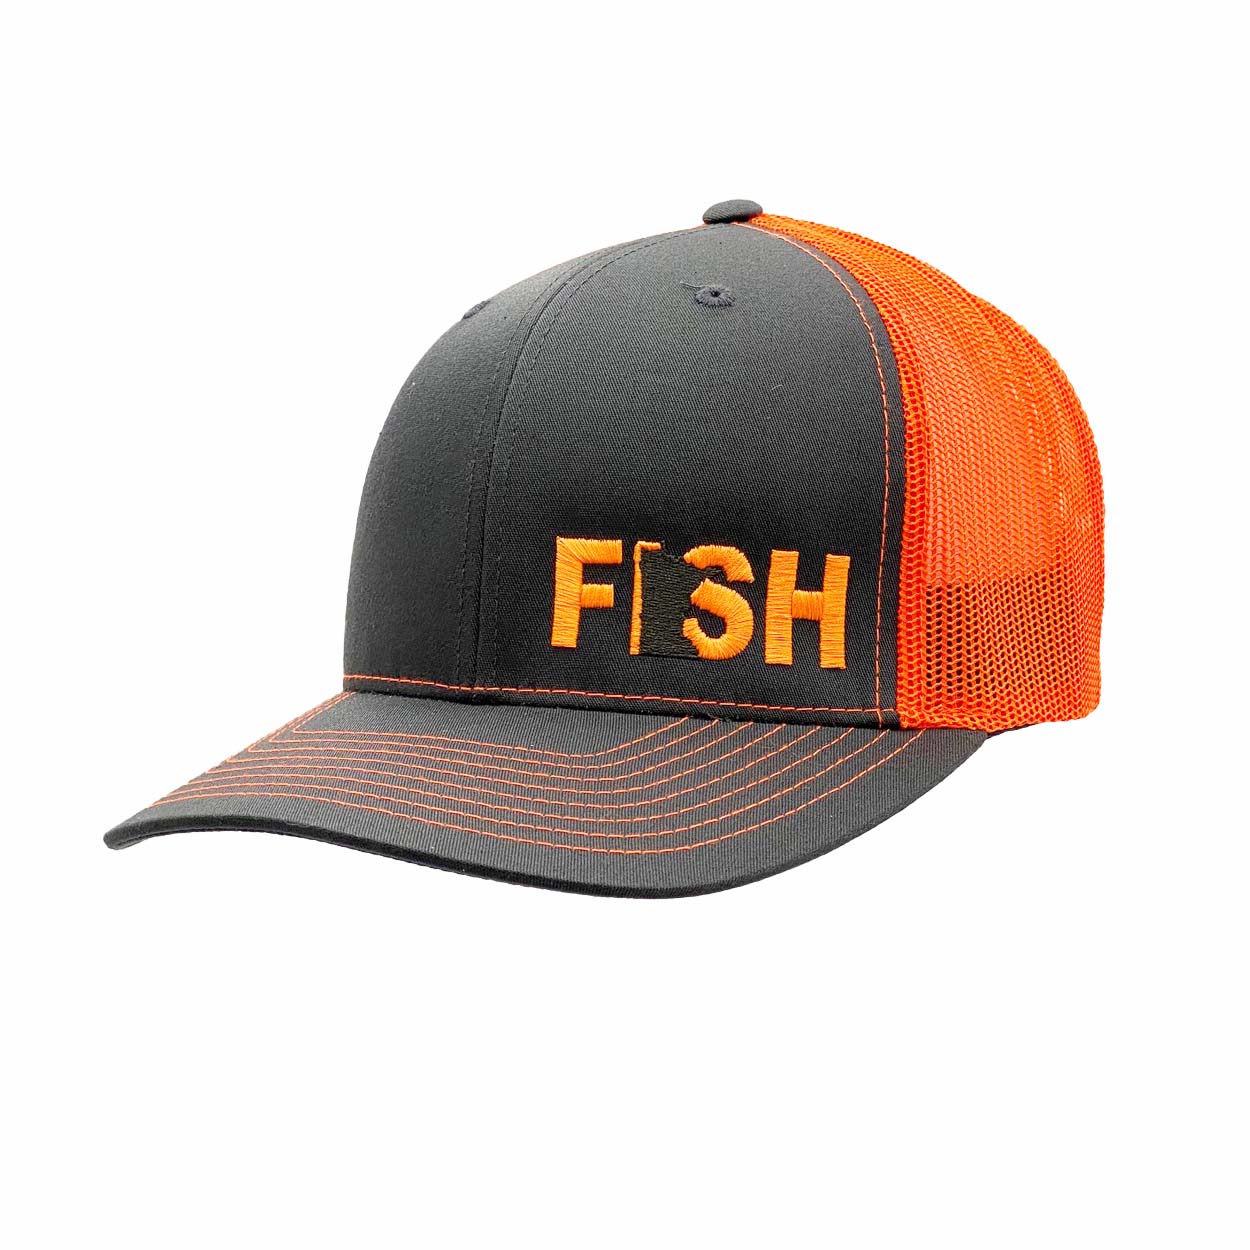 Fish Minnesota Night Out Embroidered Snapback Trucker Hat Gray/Orange